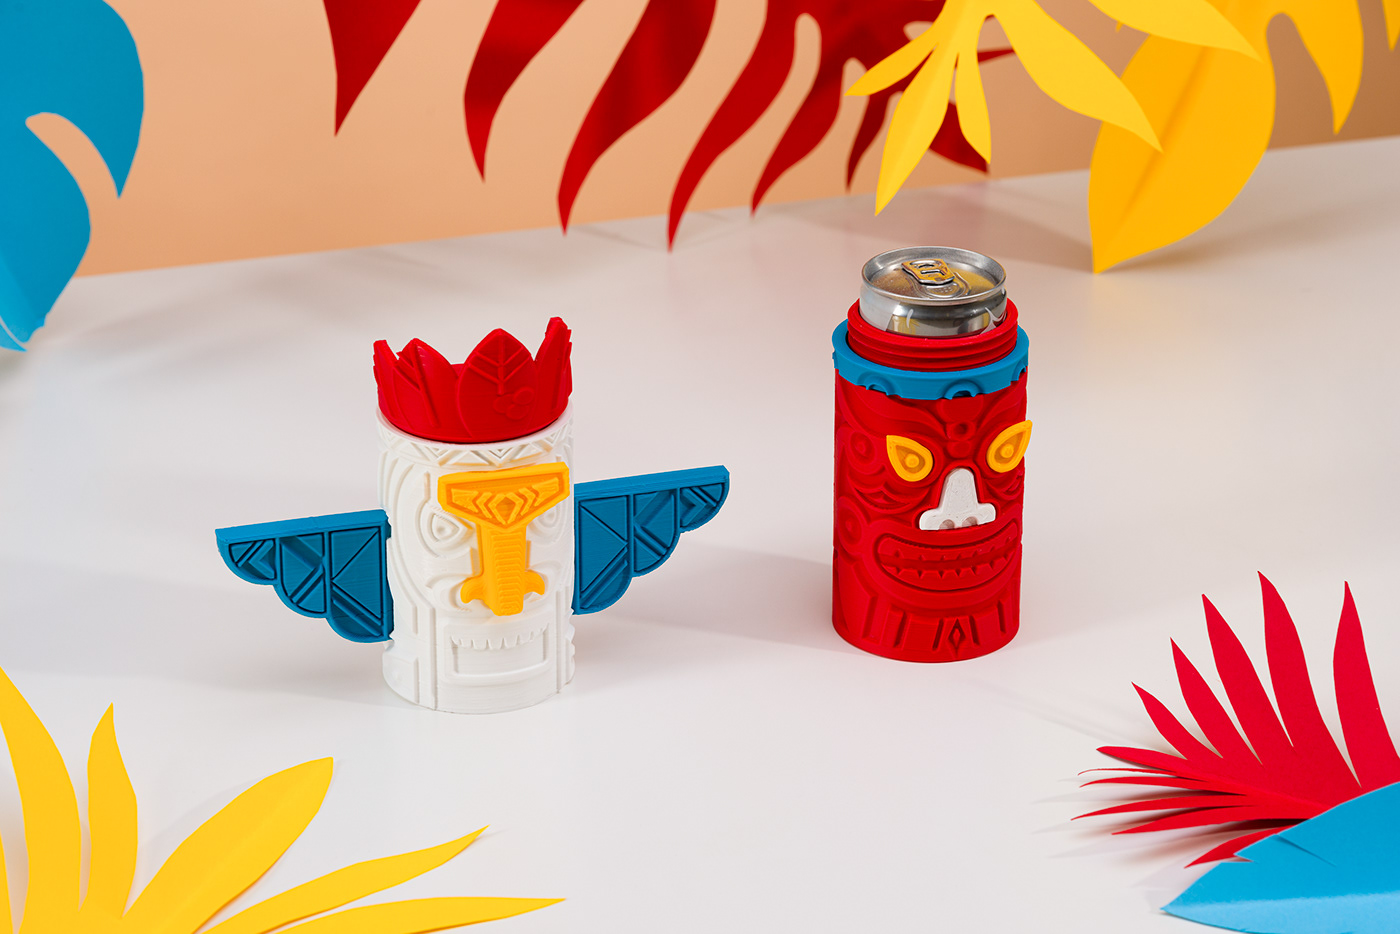 Packaging Red Bull energy drink Advertising  craft Tropical summer